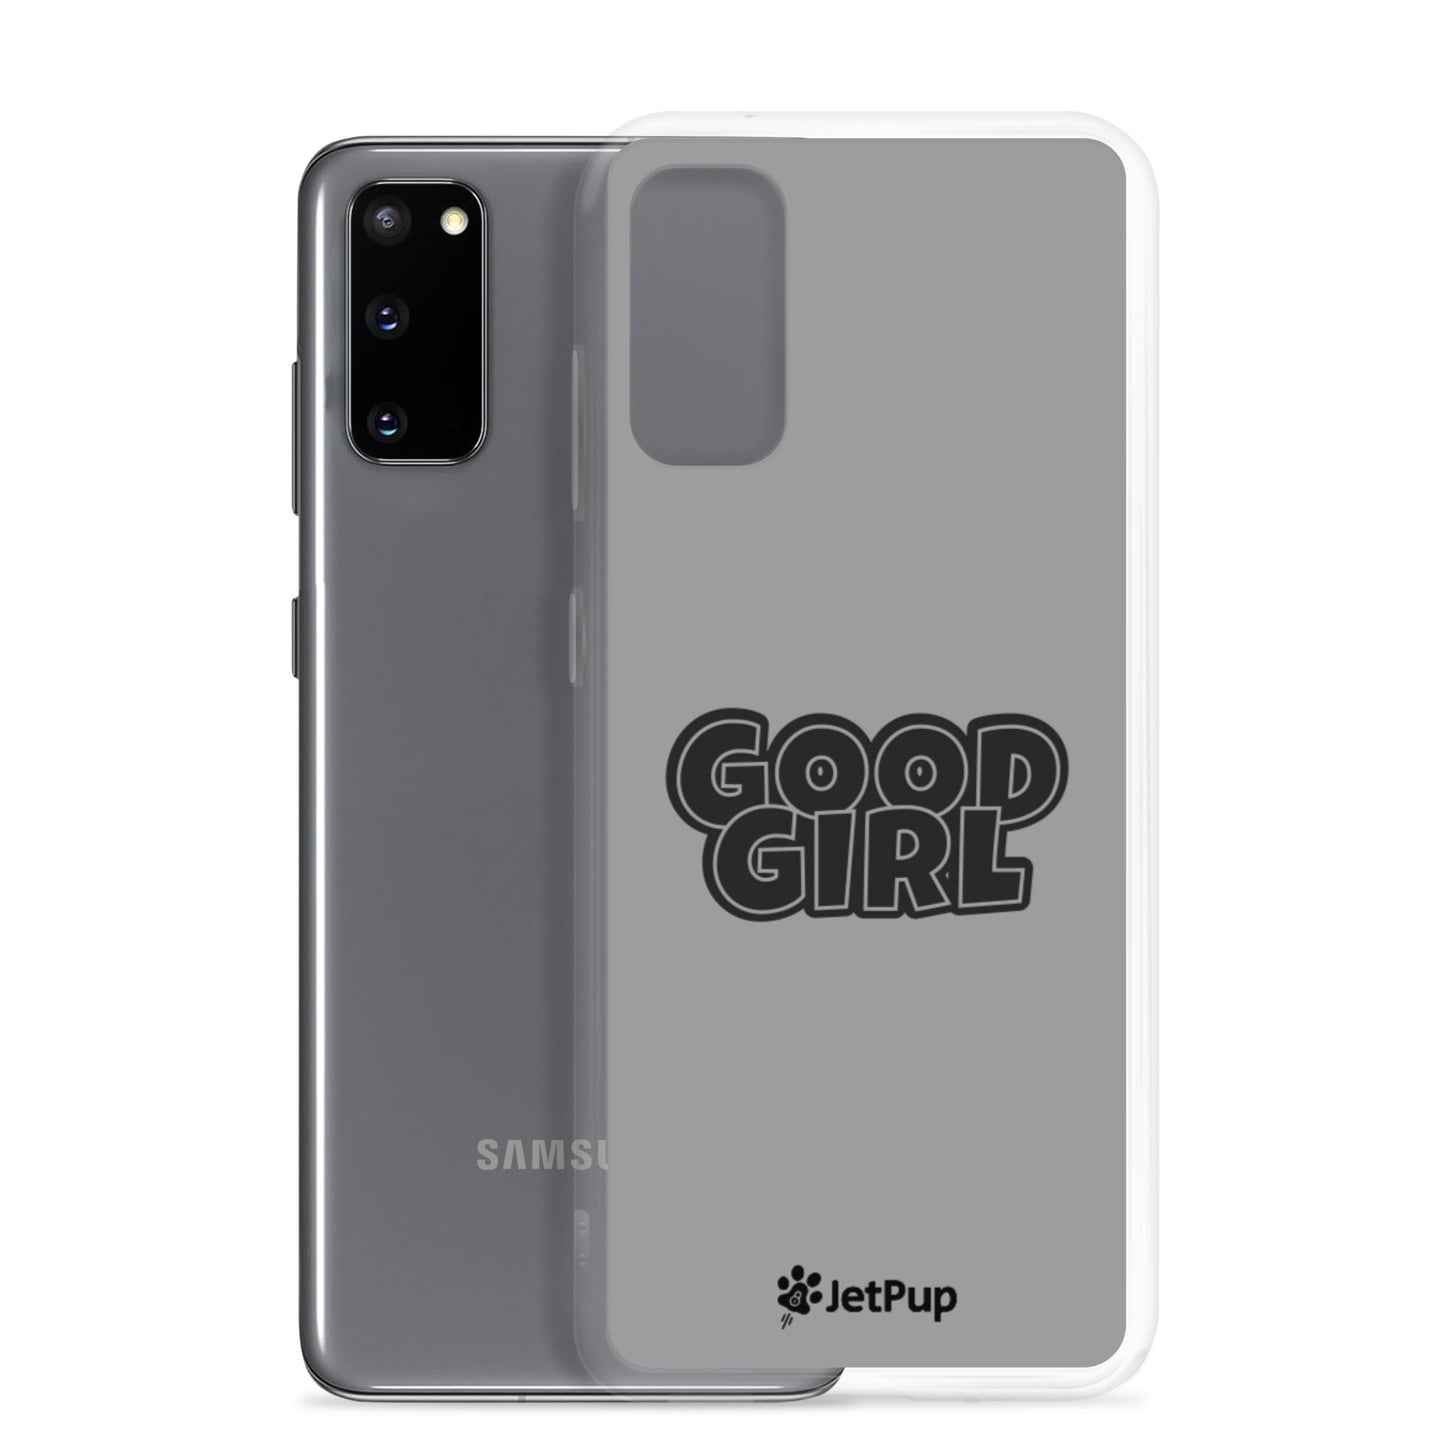 Good Girl Samsung Case - Grey - JetPup